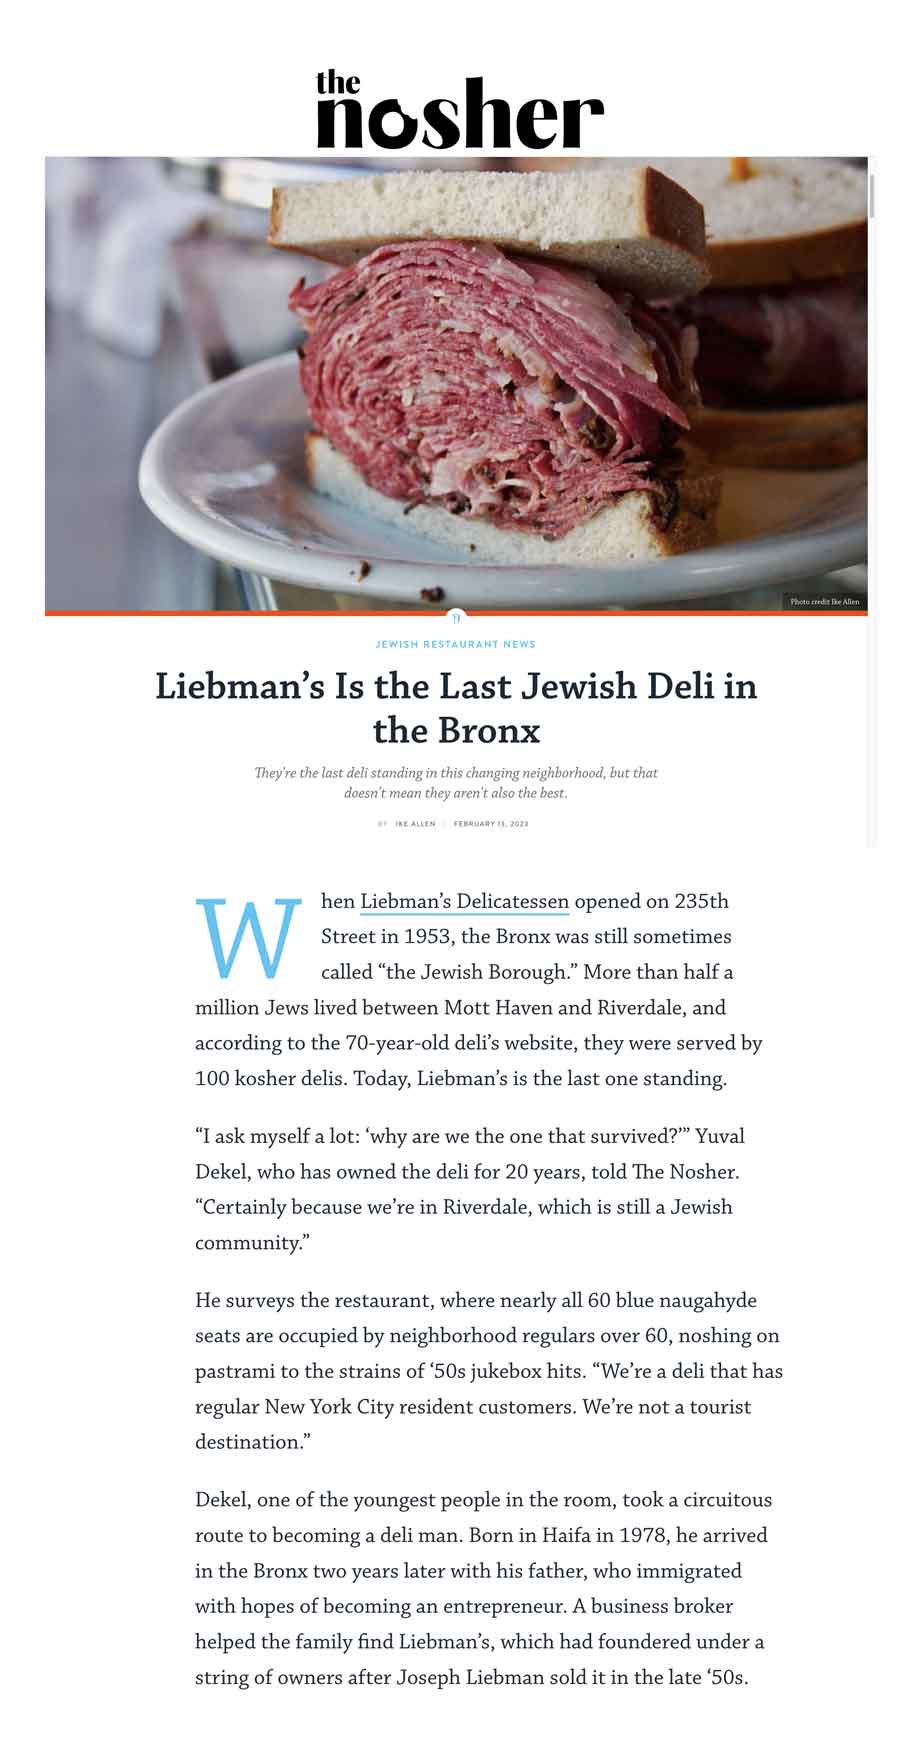 The Nosher: Liebman's Is the Last Jewish Deli in the Bronx"